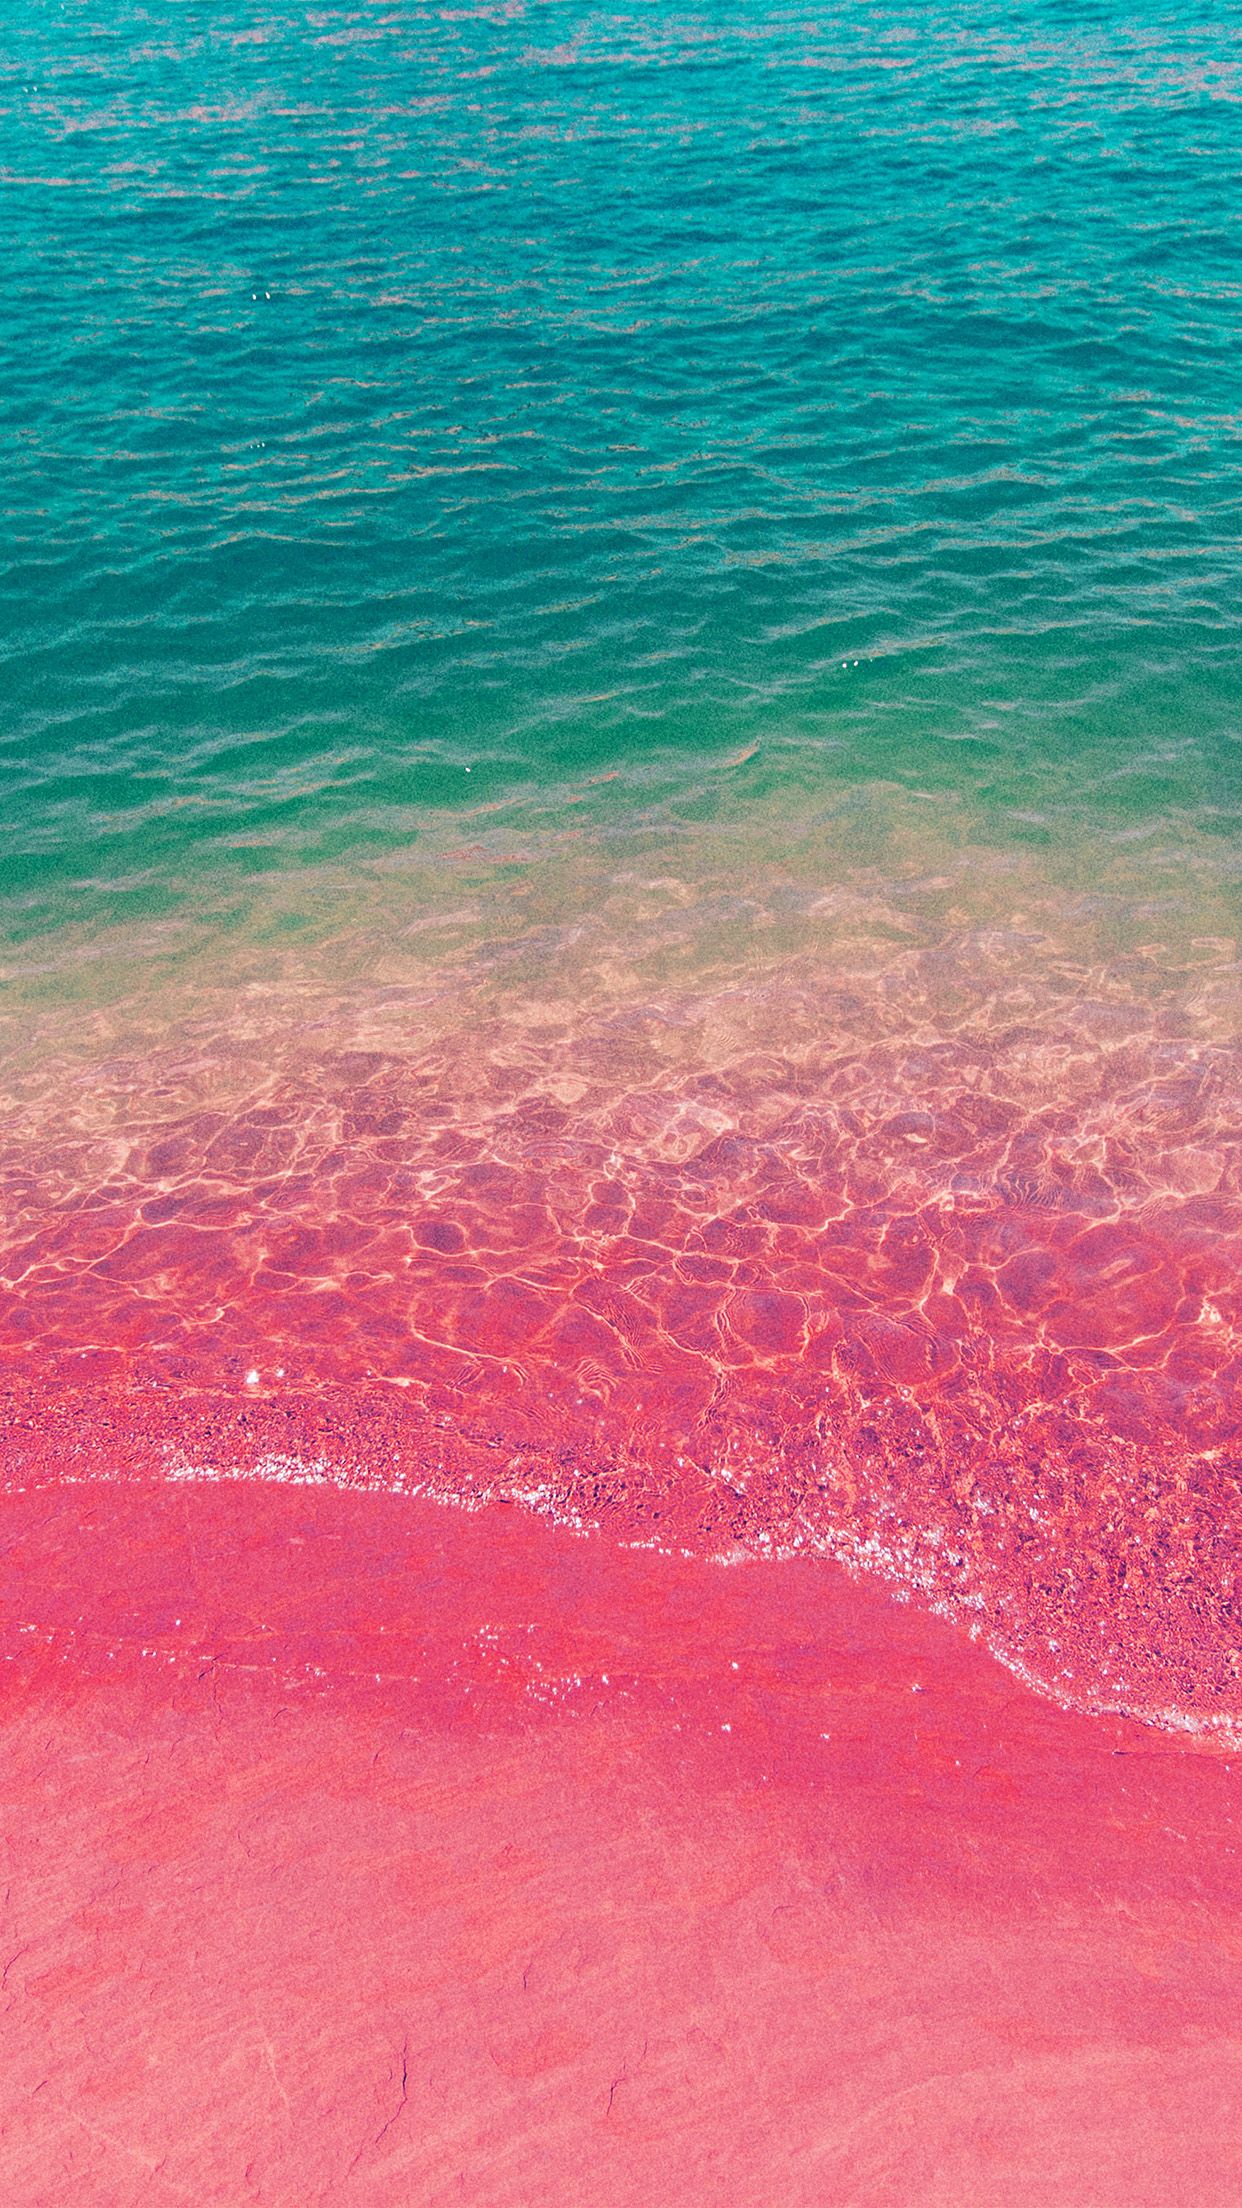 iPhone wallpaper. sea water beach summer nature pink